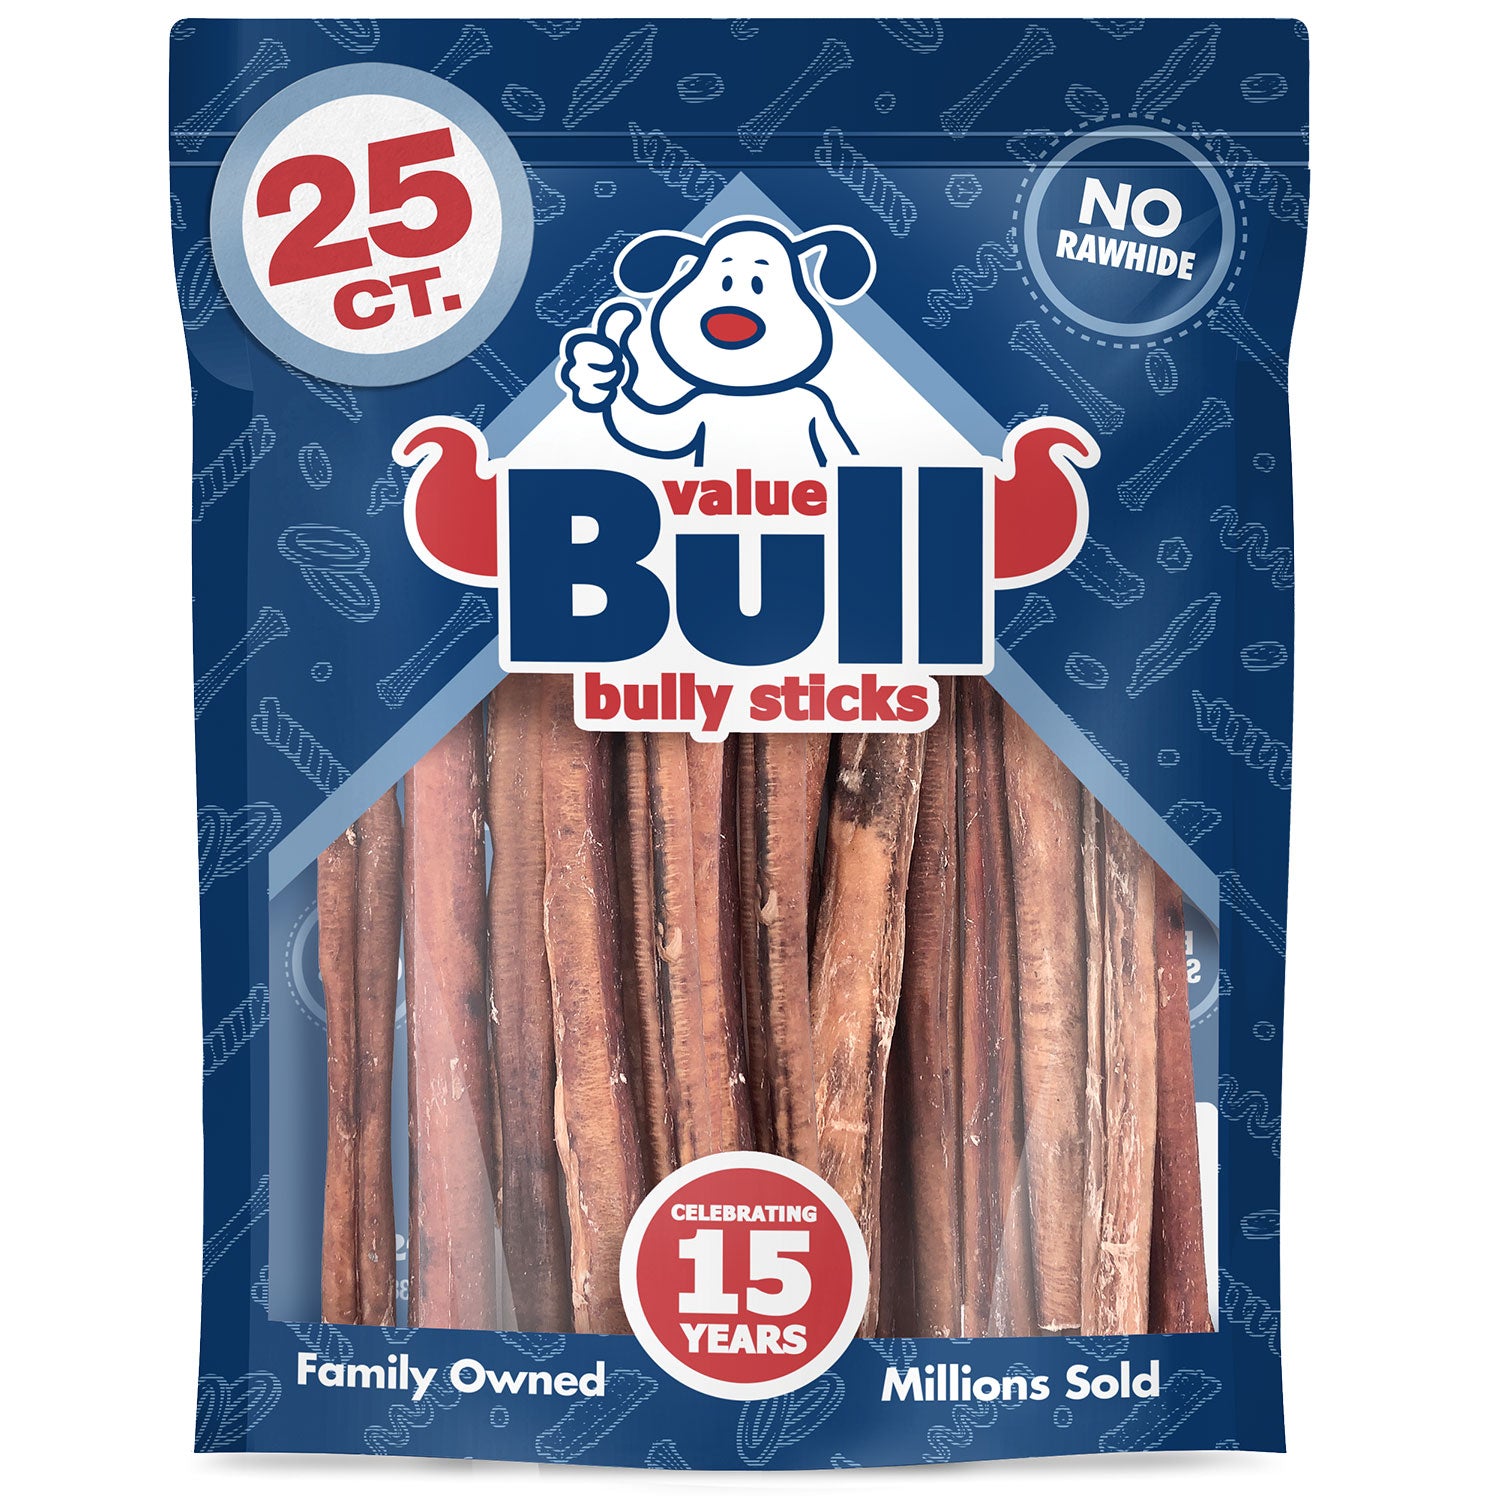 ValueBull Bully Sticks for Dogs, Jumbo 12 Inch, 25 Count